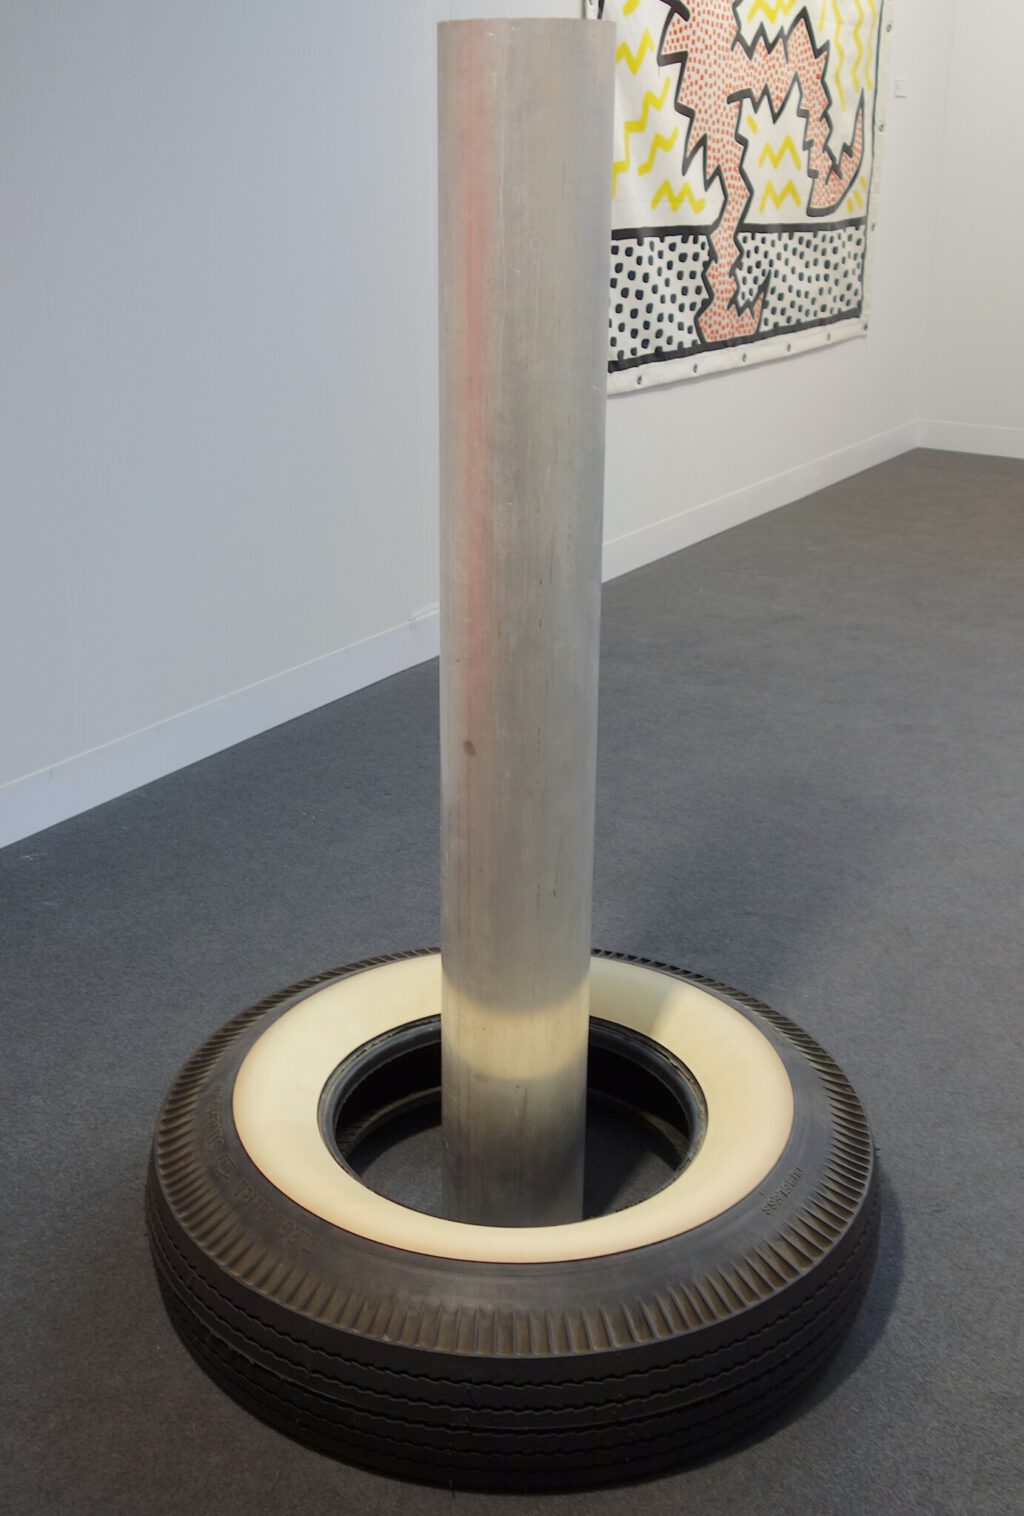 Cady Noland キャディ・ノーランド Untitled 1997-1998. Aluminium pipe, Whitewall tire, 122 x 76 cm. Ed.80